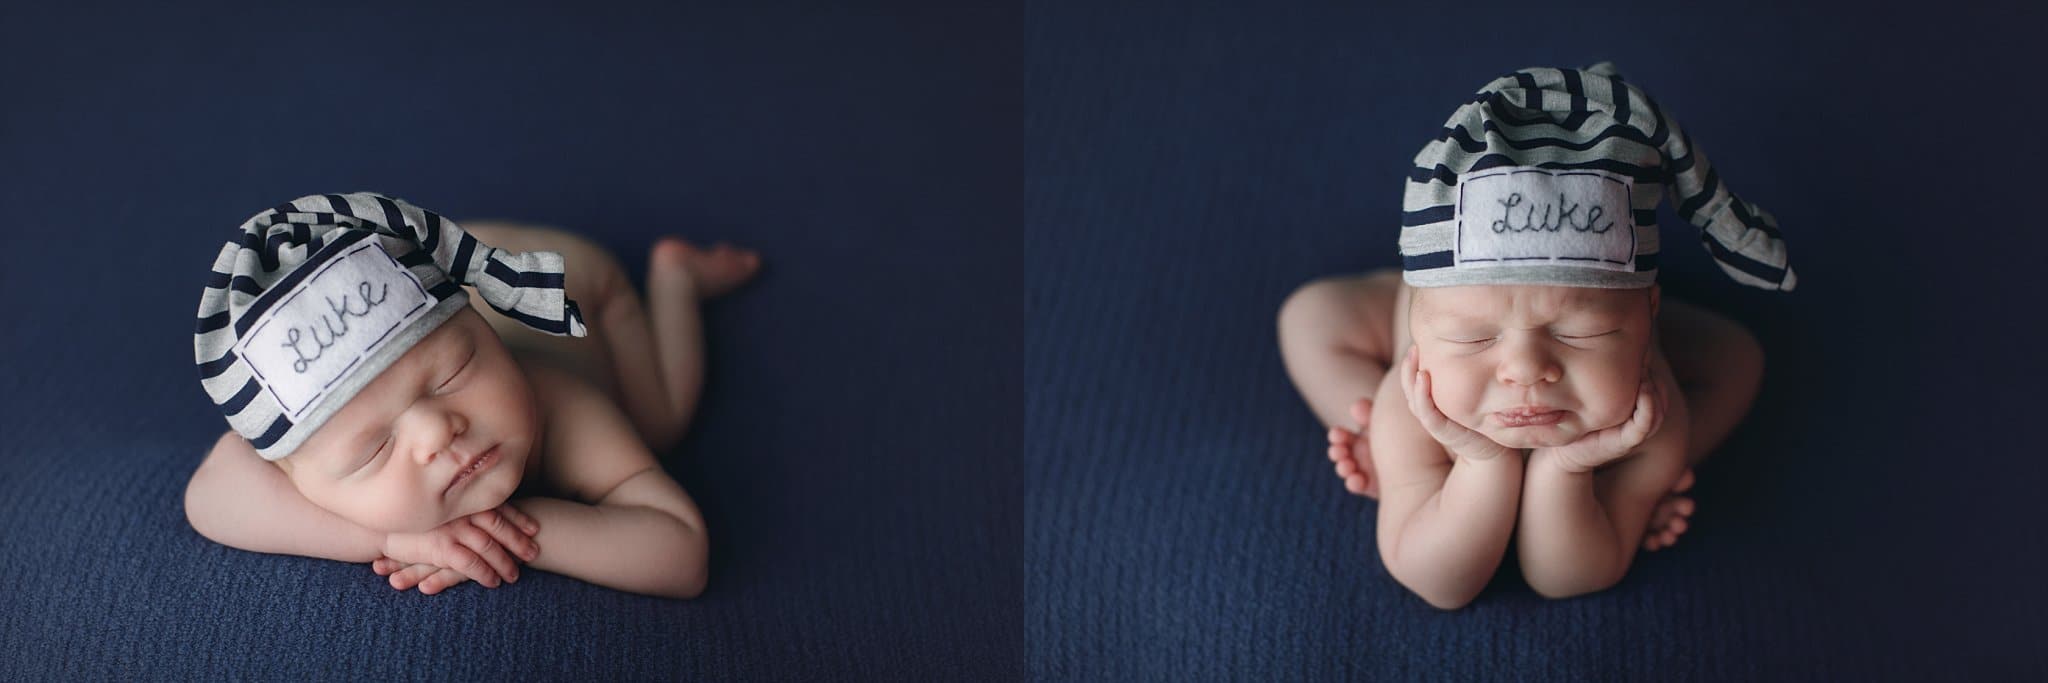 newborn baby boy striped sleepy cap froggy pose on blue background